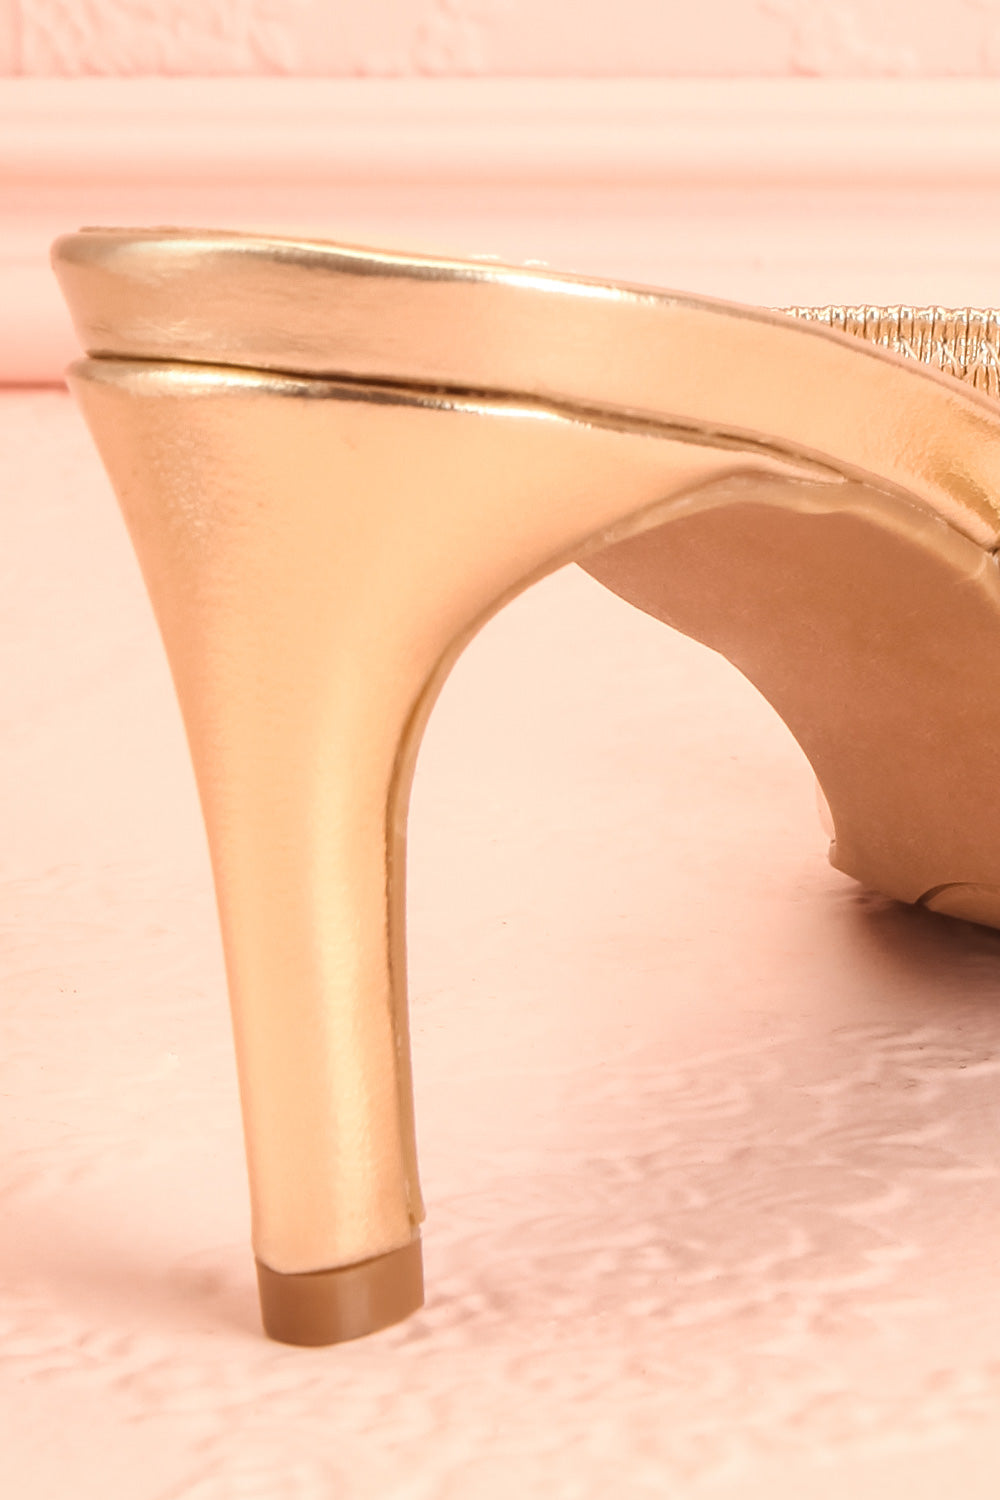 gold slip on heels